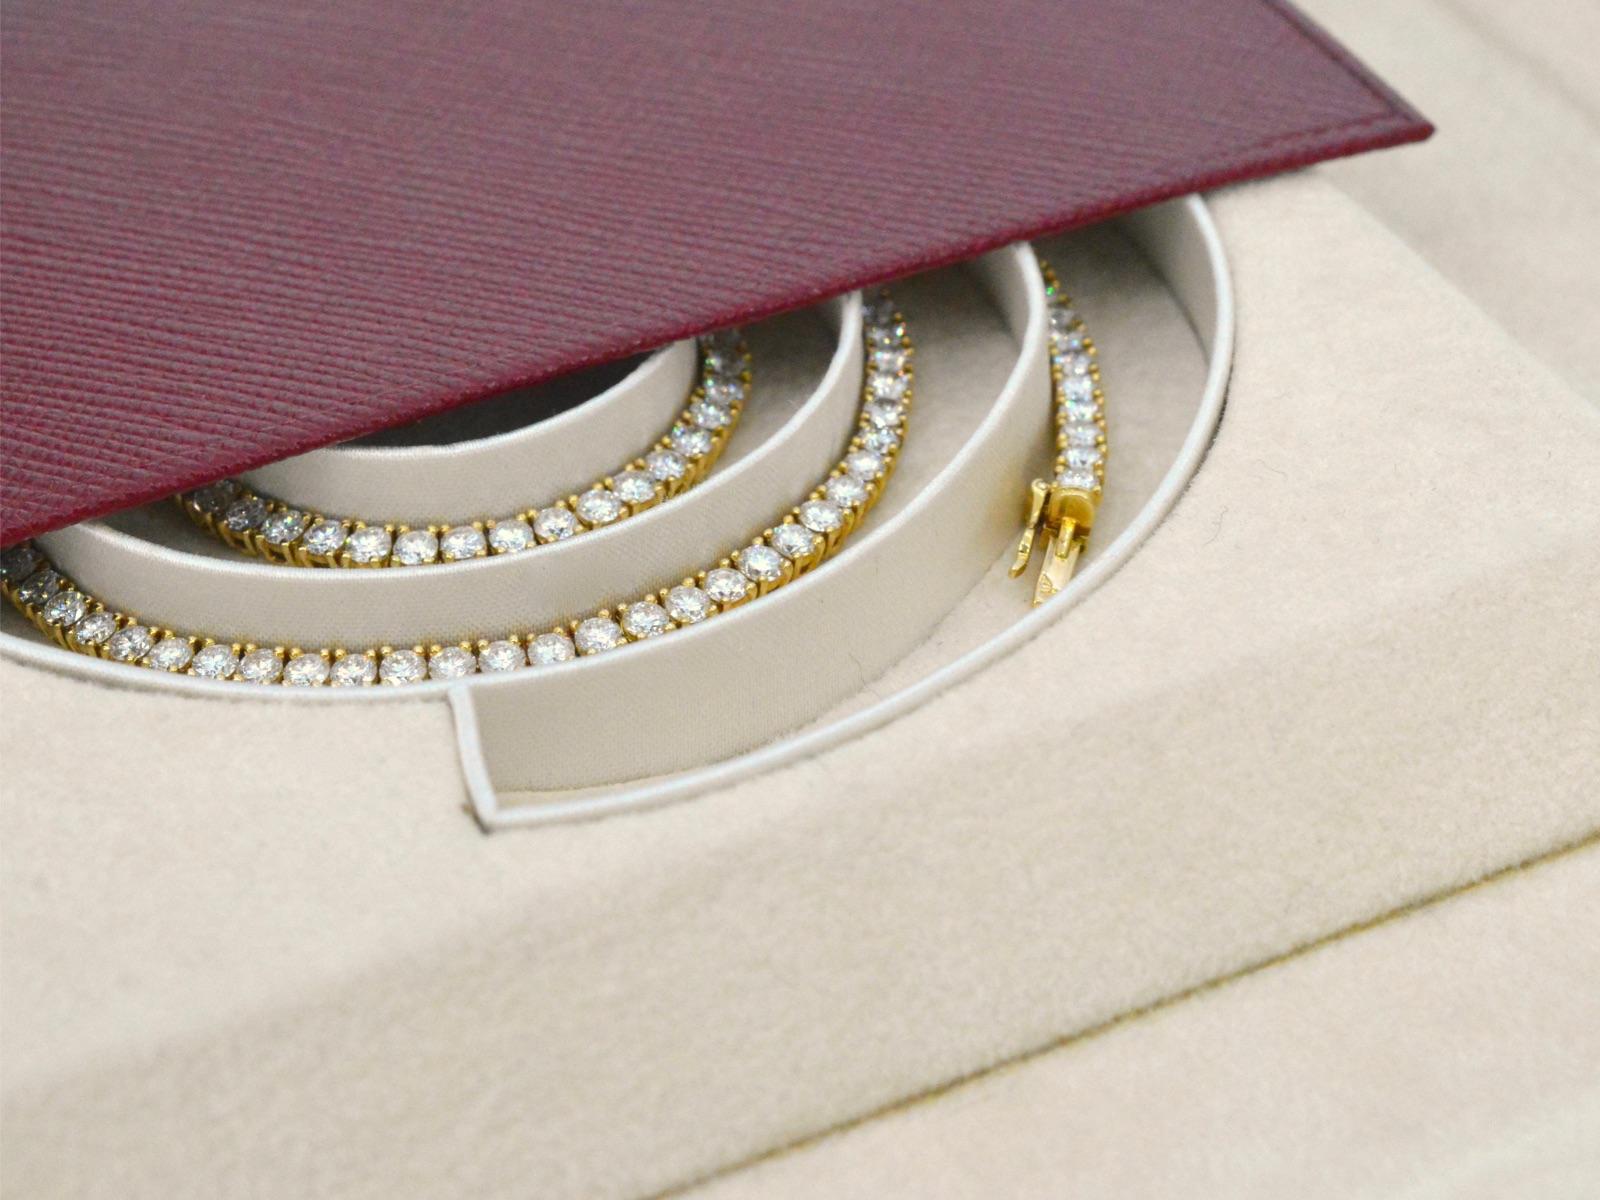 Brilliant Cut Cartier Tennis-Collier Necklace with 8.88 Carat Diamonds